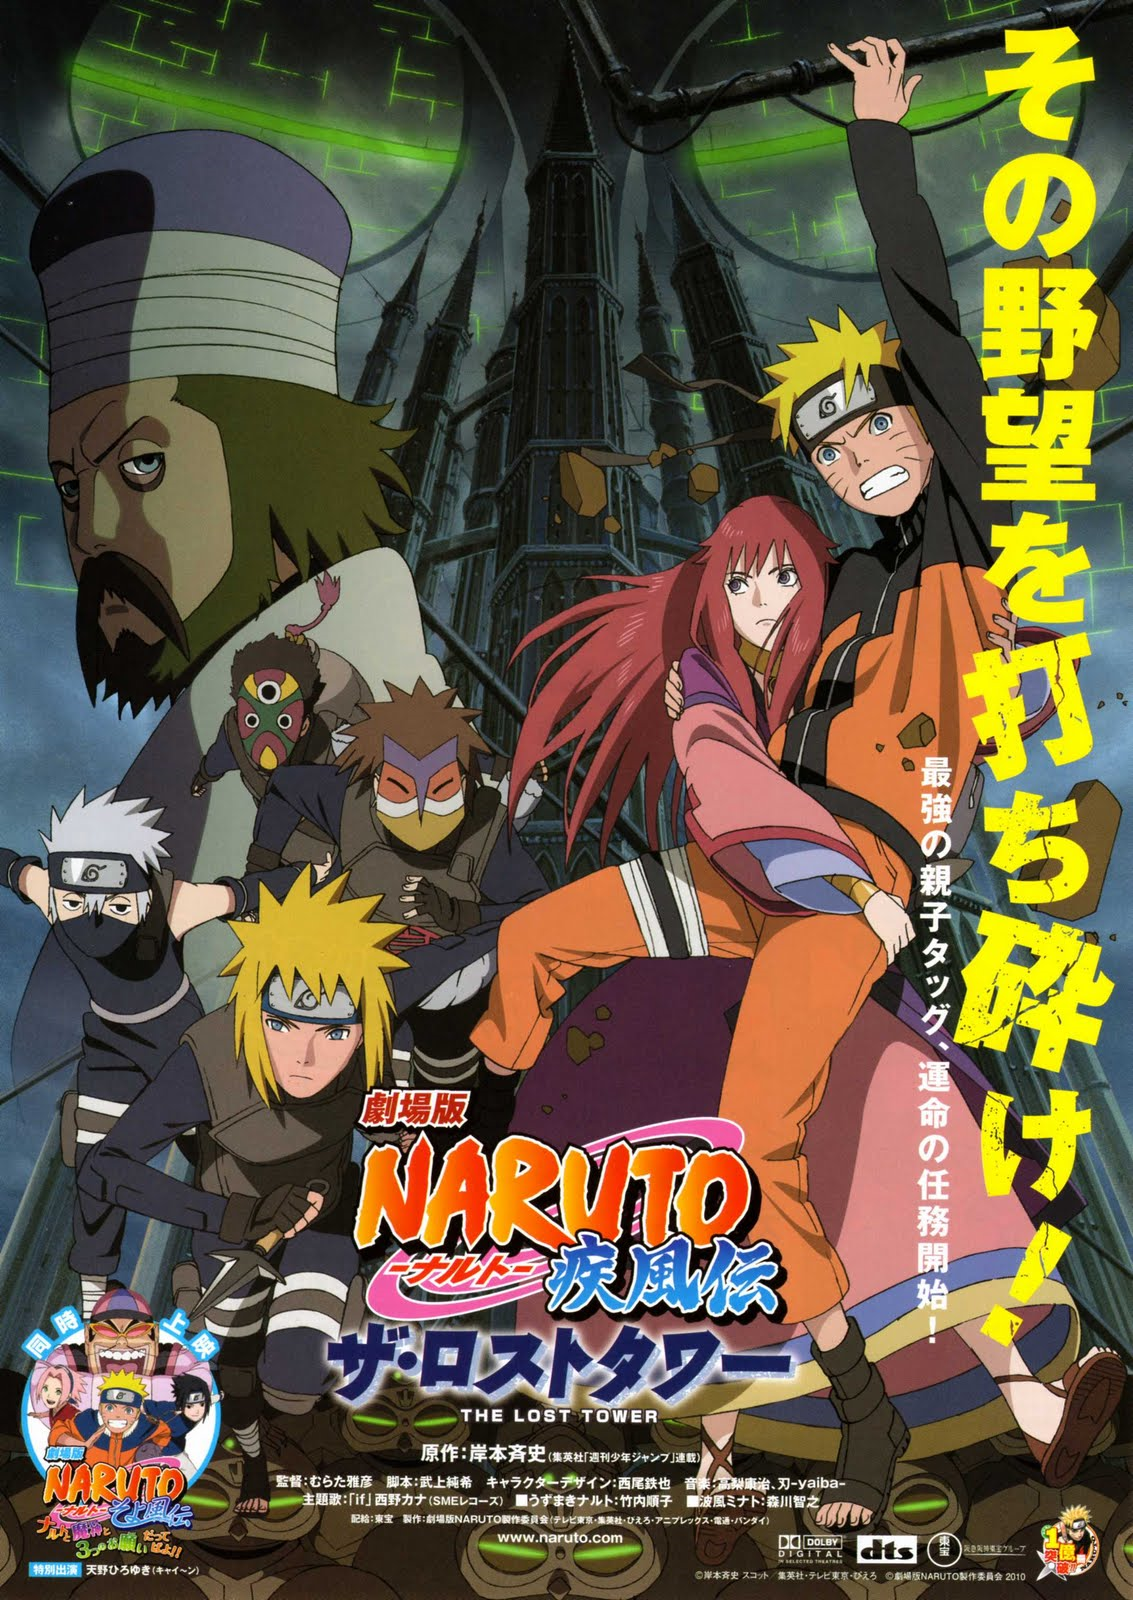 Full naruto  naruto shippuden episodes list   2016 guide